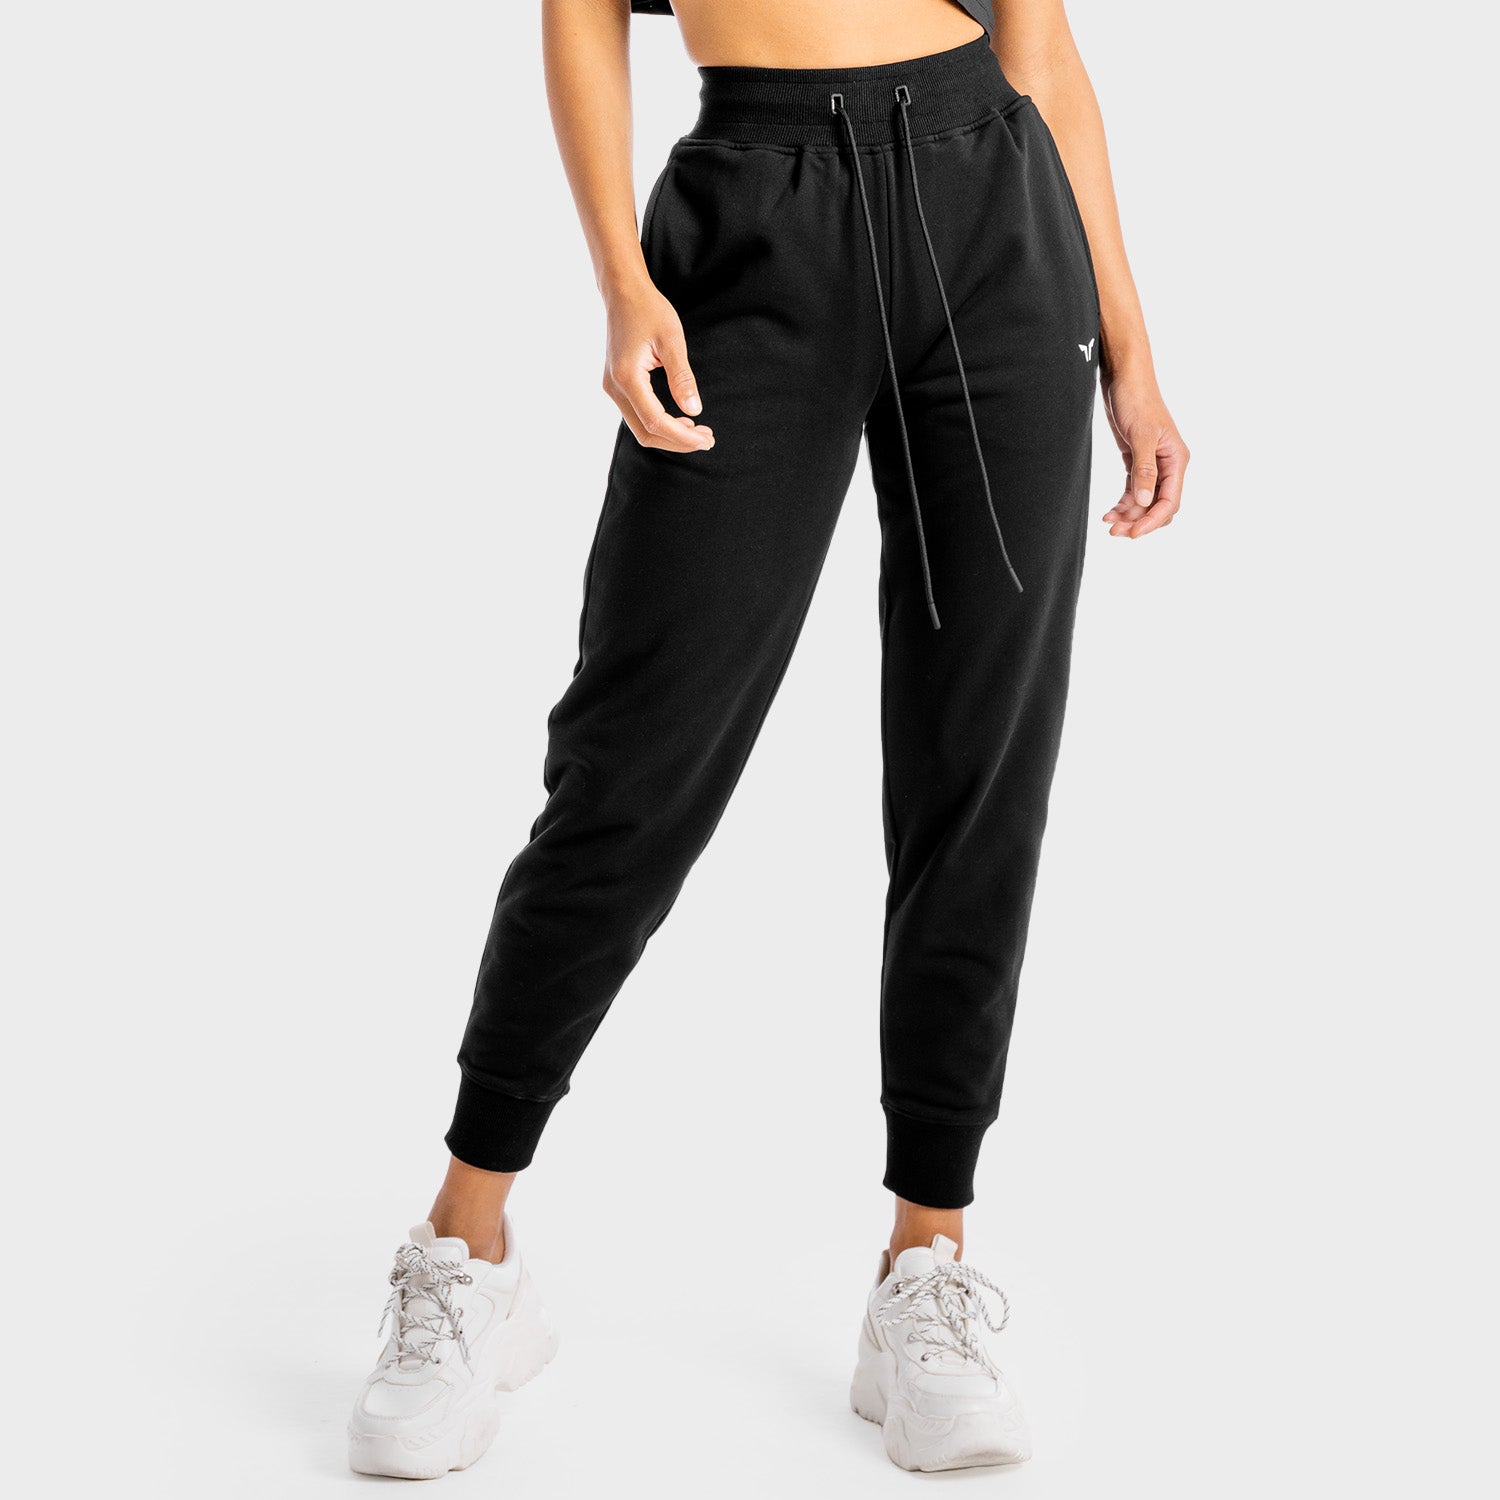 AE, Core Oversize Joggers - Black, Workout Pants Women